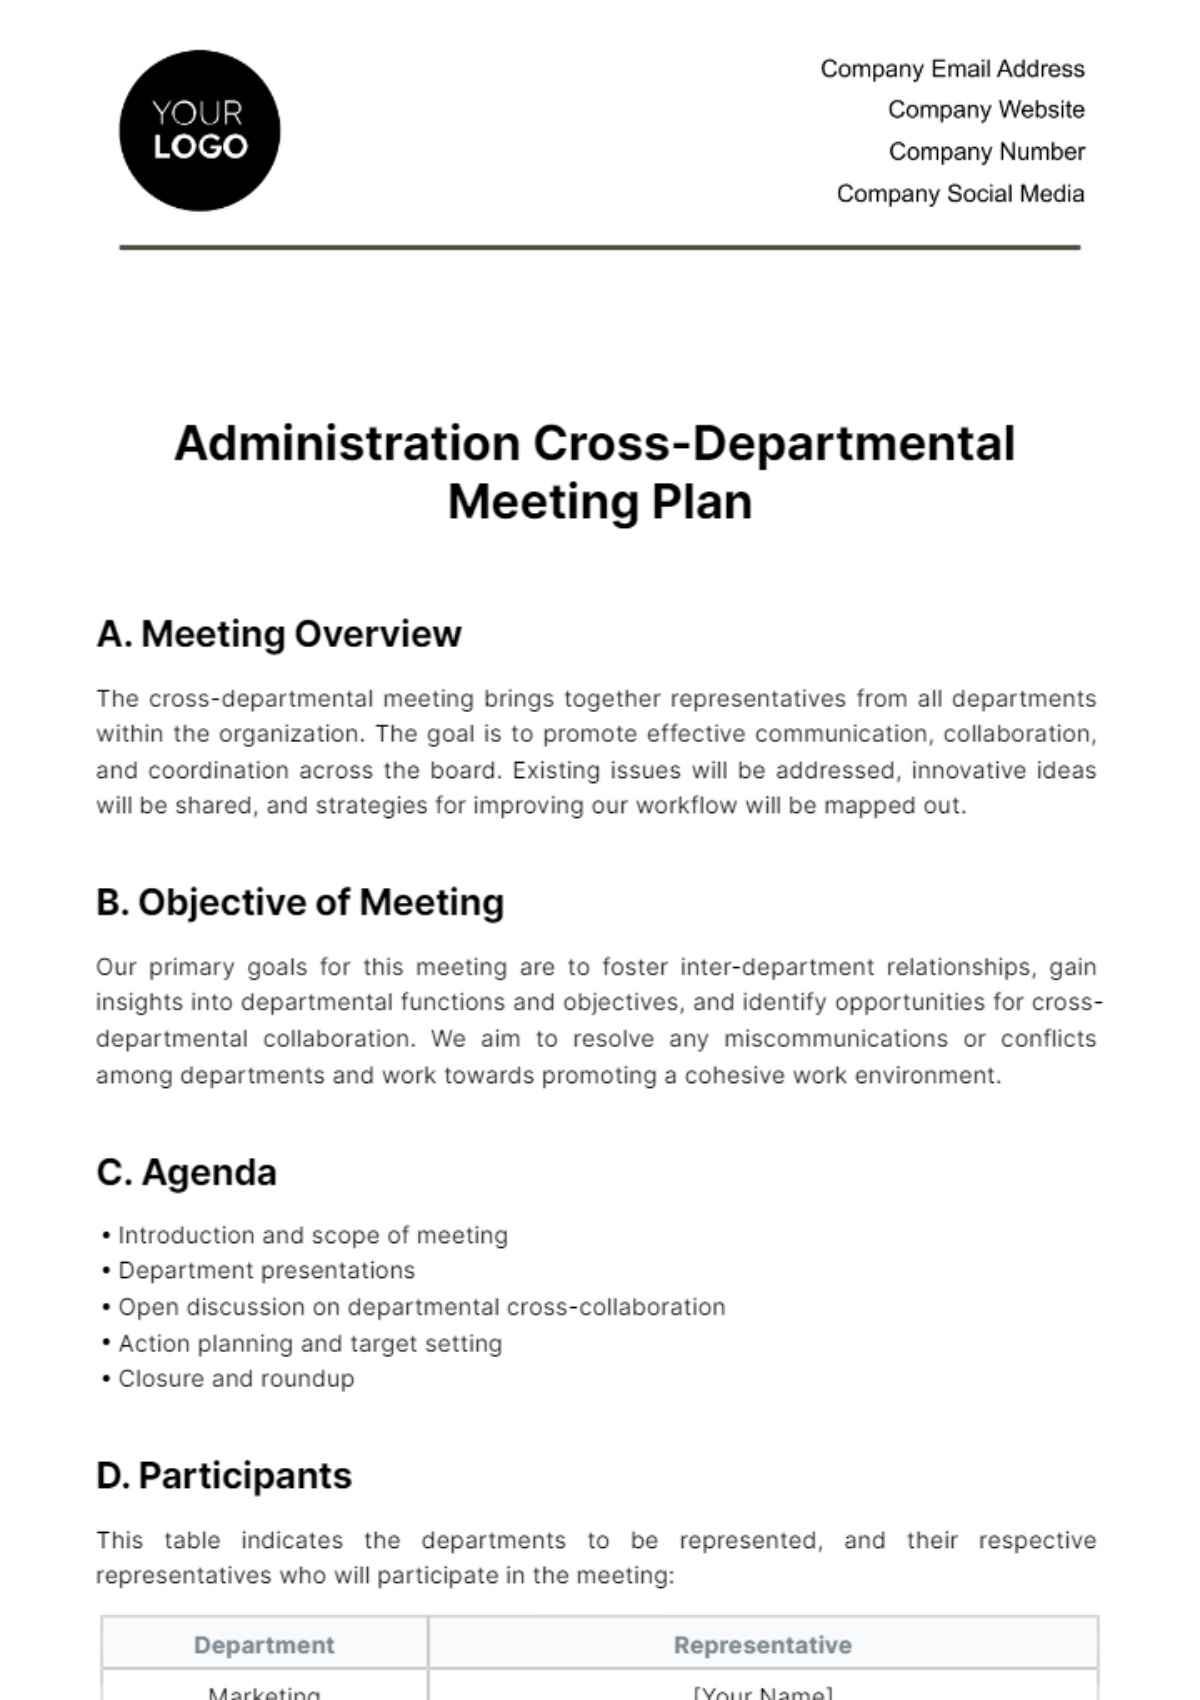 Administration Cross-Departmental Meeting Plan Template